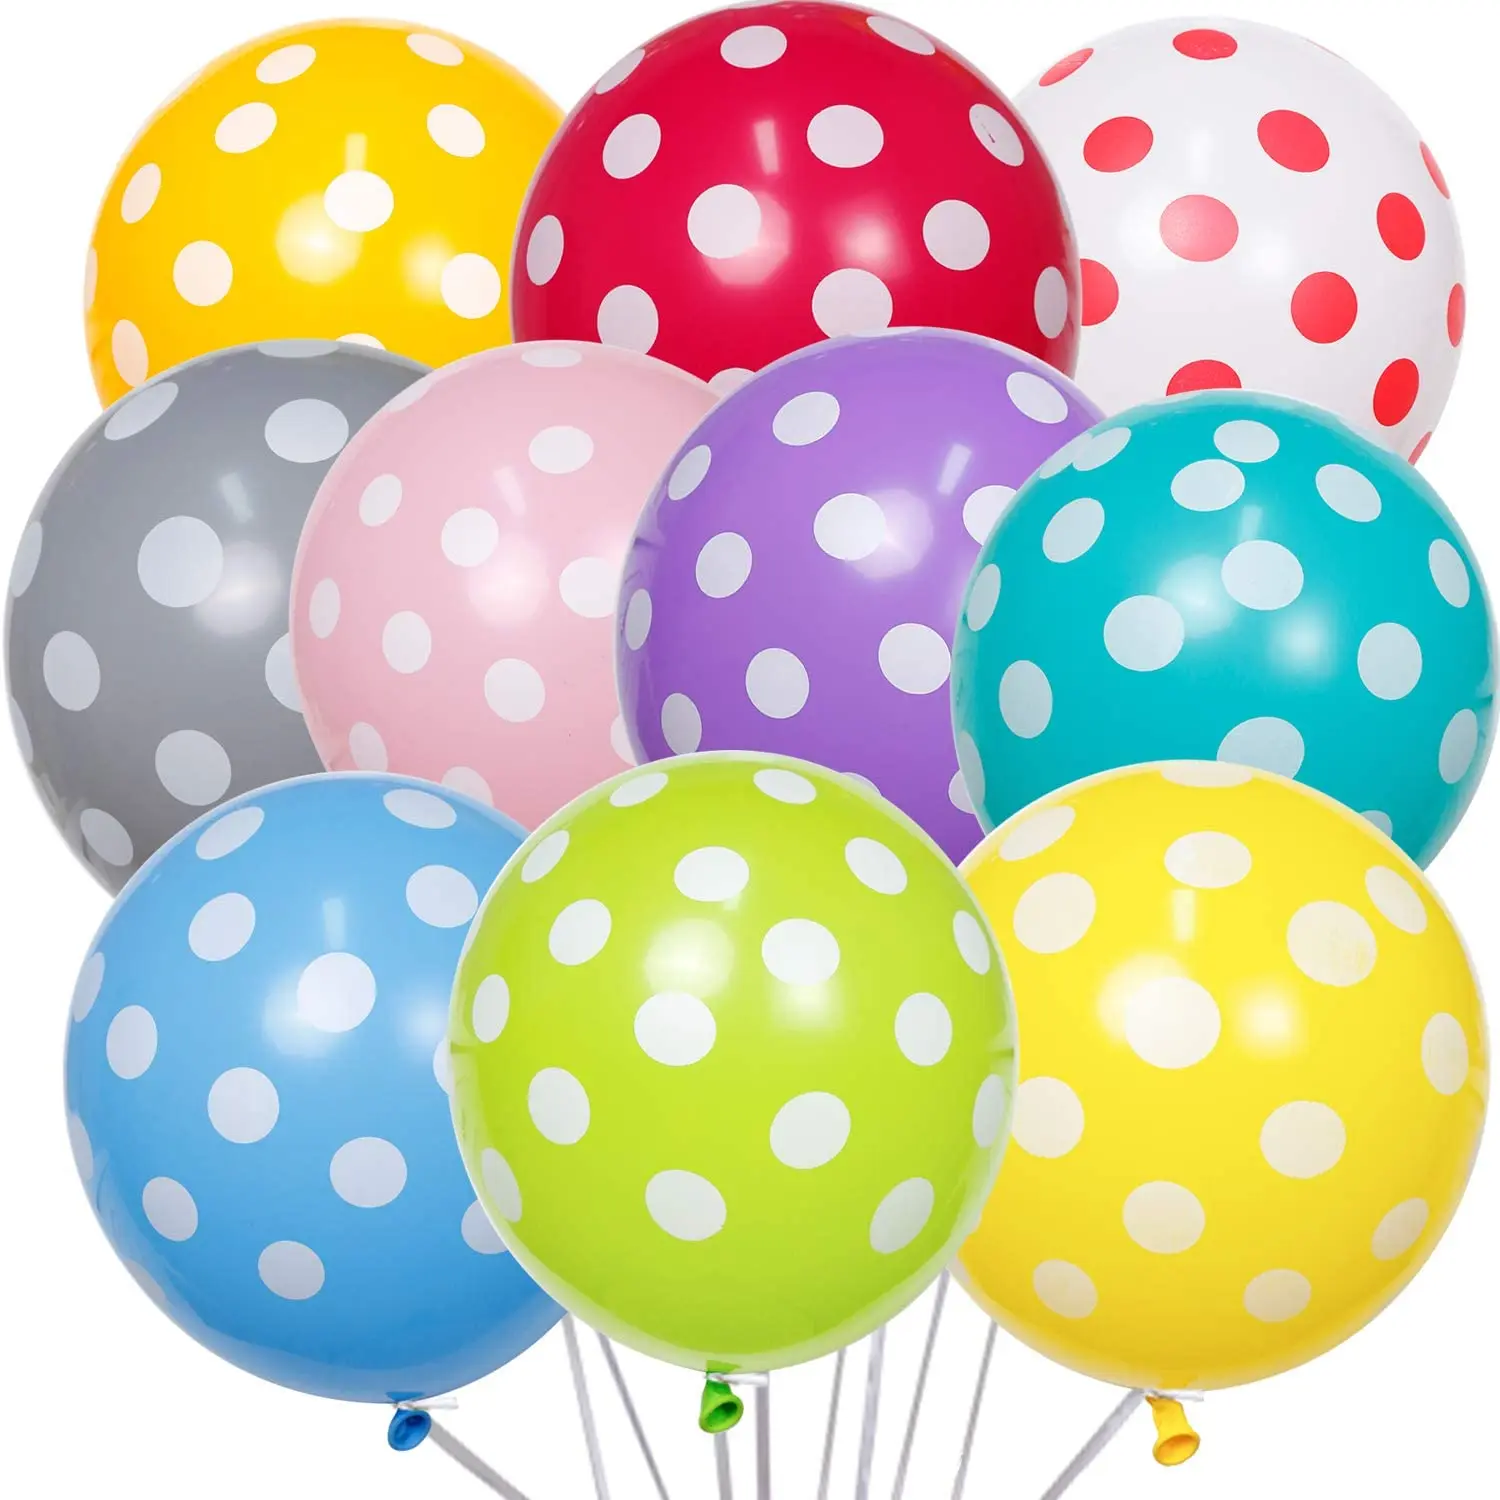 12" INCH  BALLON POLKA DOT Quality Party Birthday Wedding Balloons baloons 